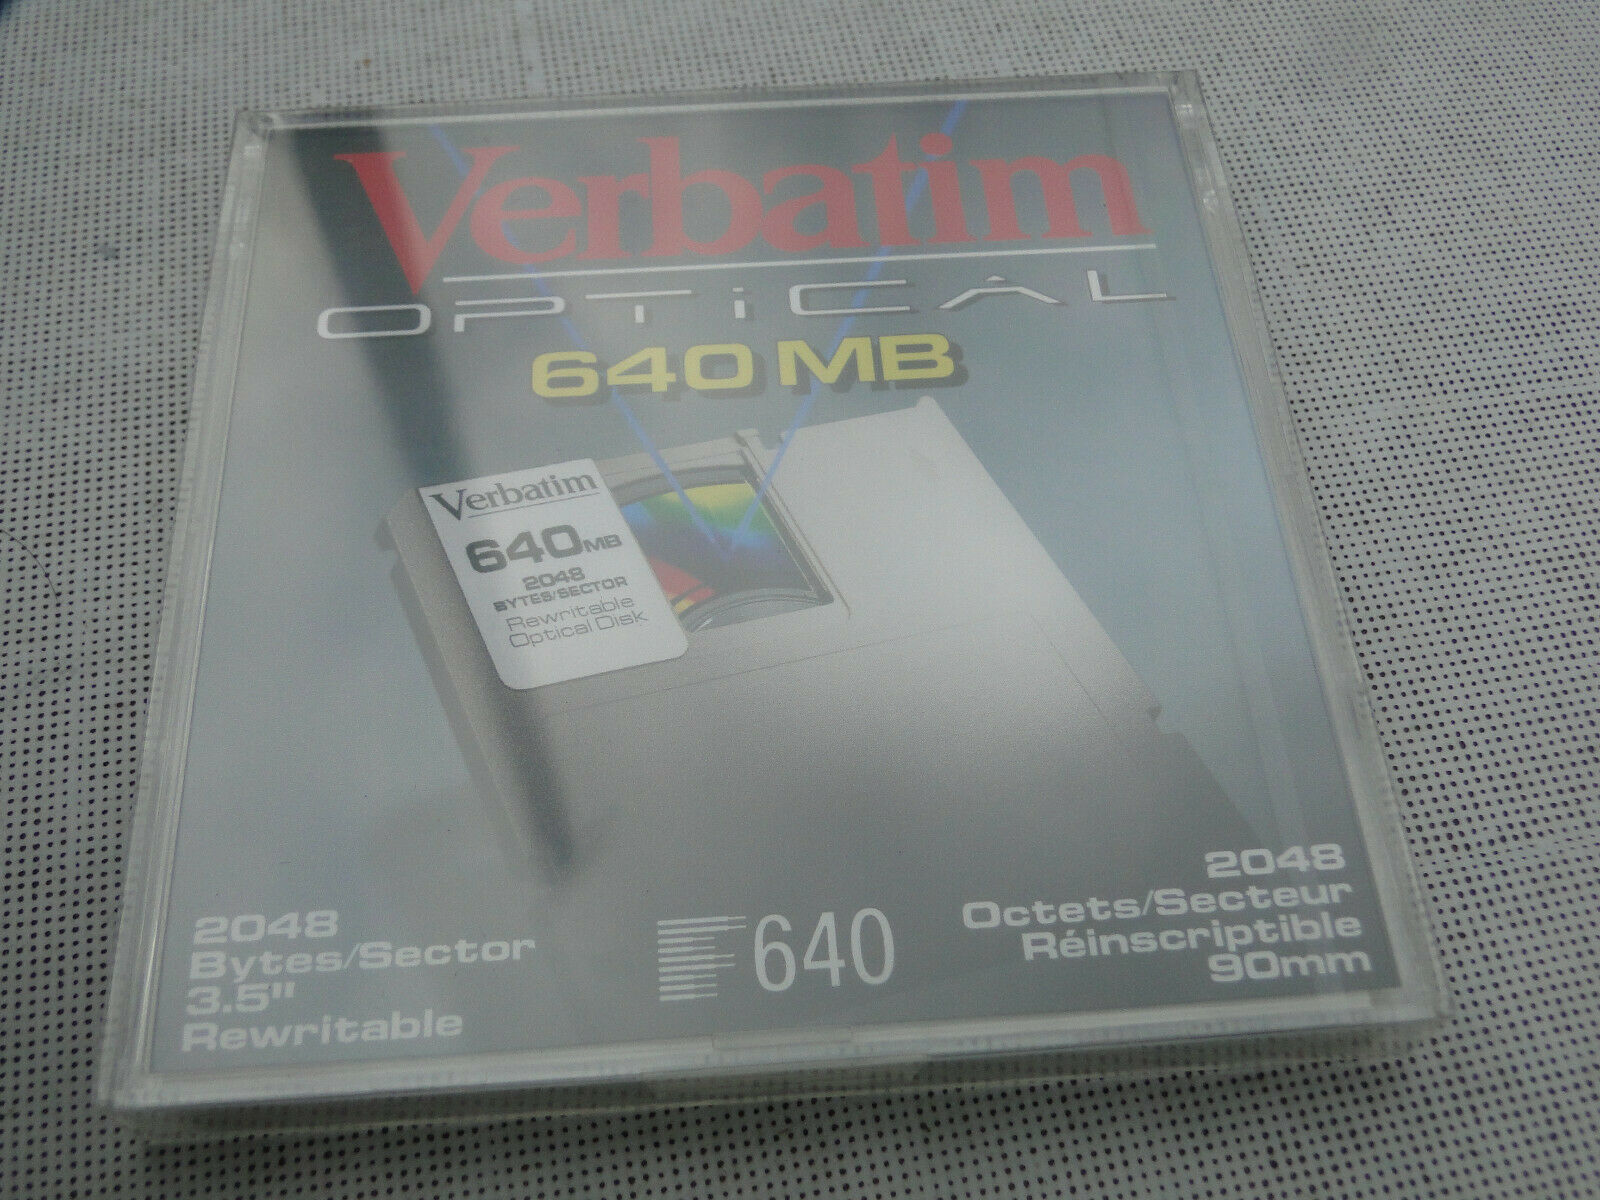 Primary image for Verbatim Magneto Optical Disc 640 MB 3,5" NOS